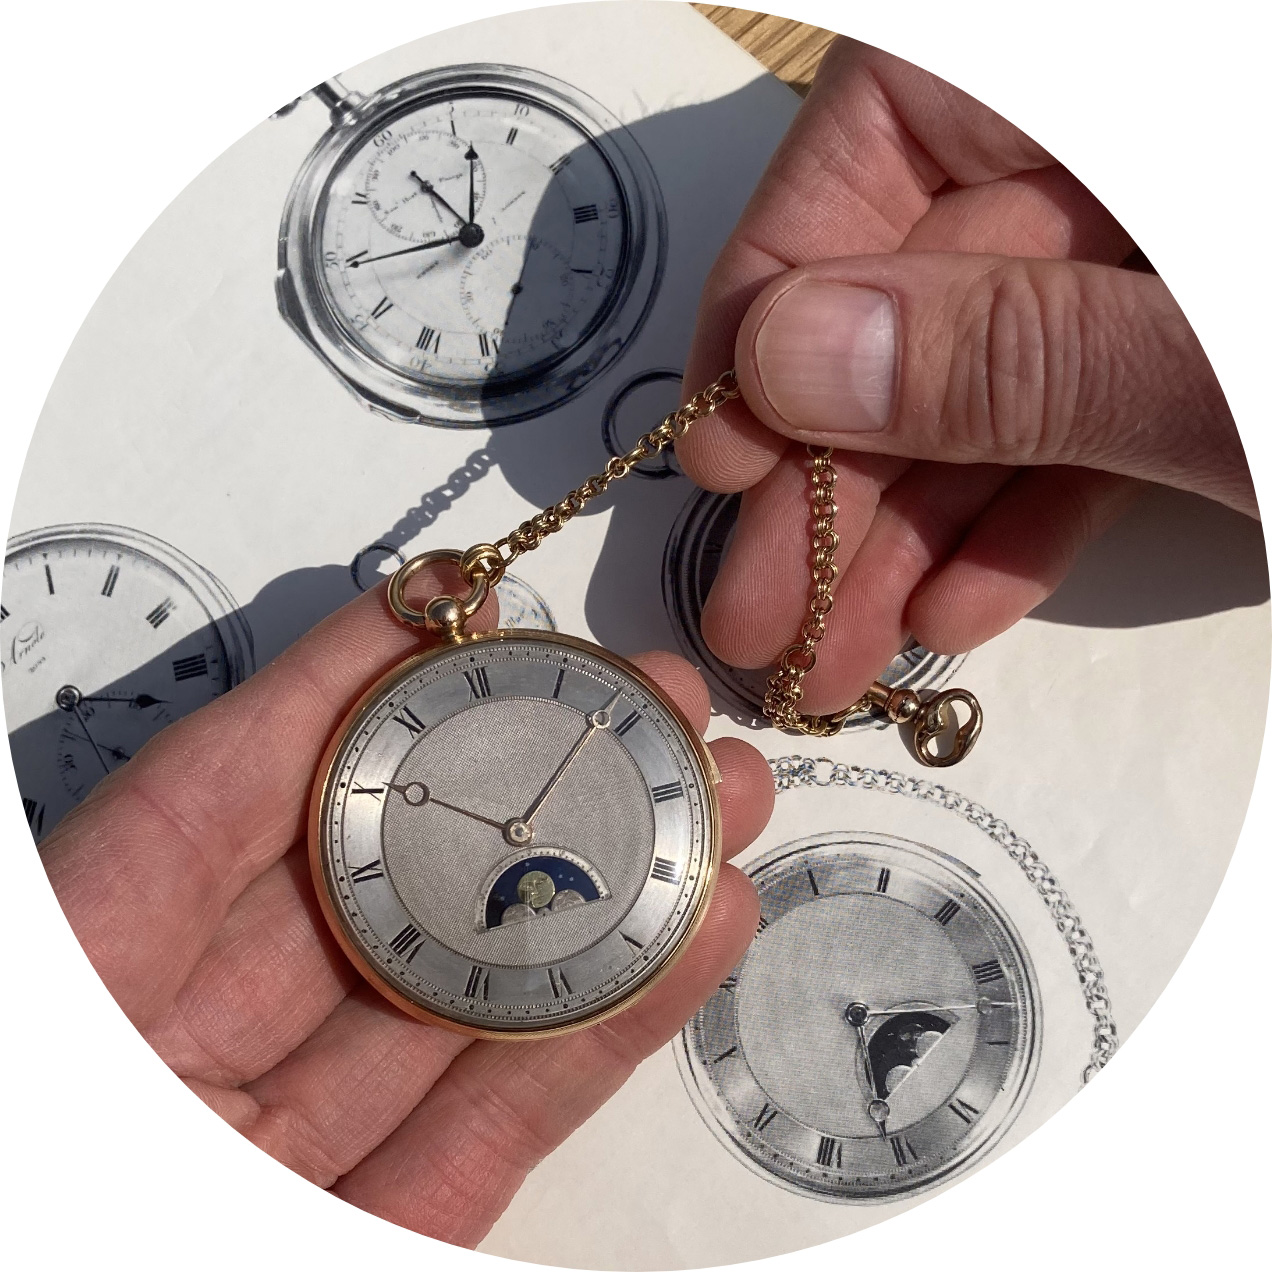 Antique and vintage pocket watches, Alexander Barter watch expert